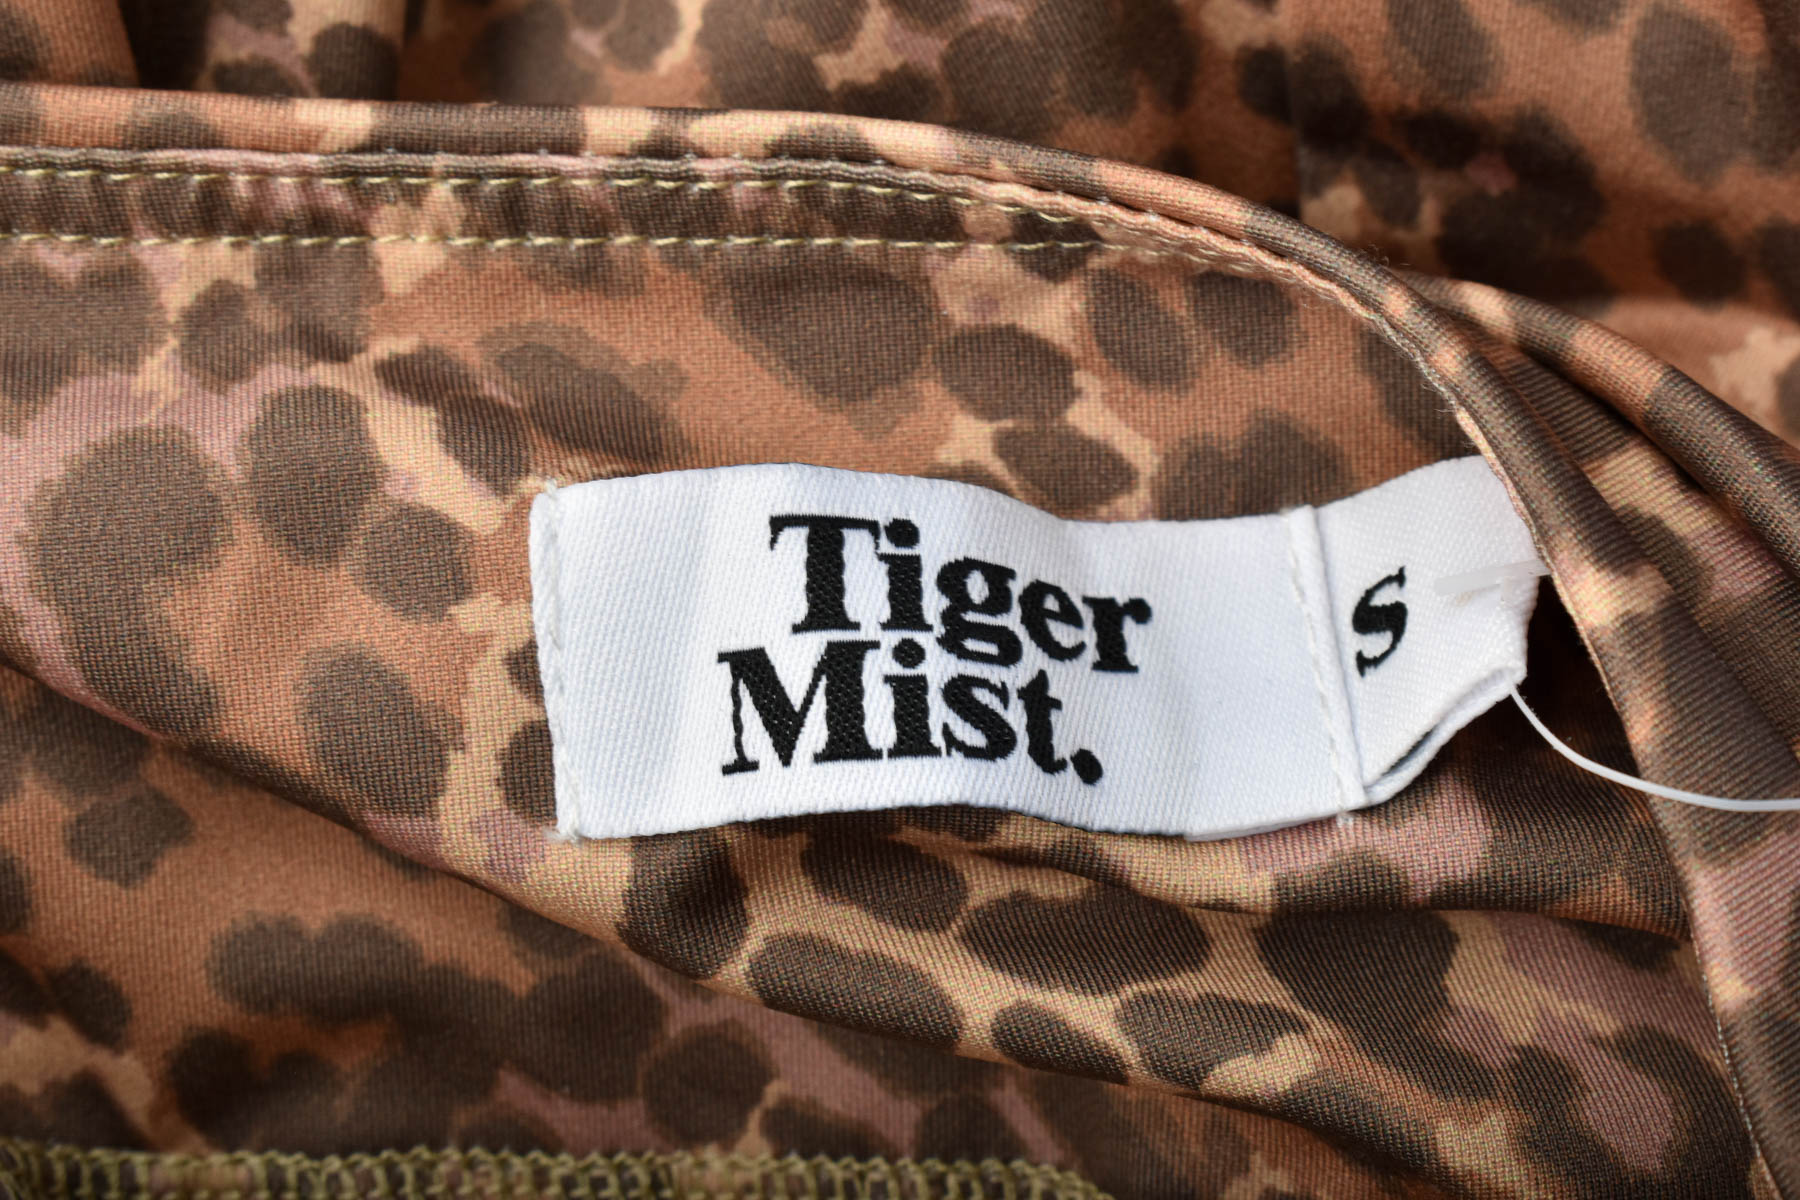 Leggings - Tiger Mist - 2